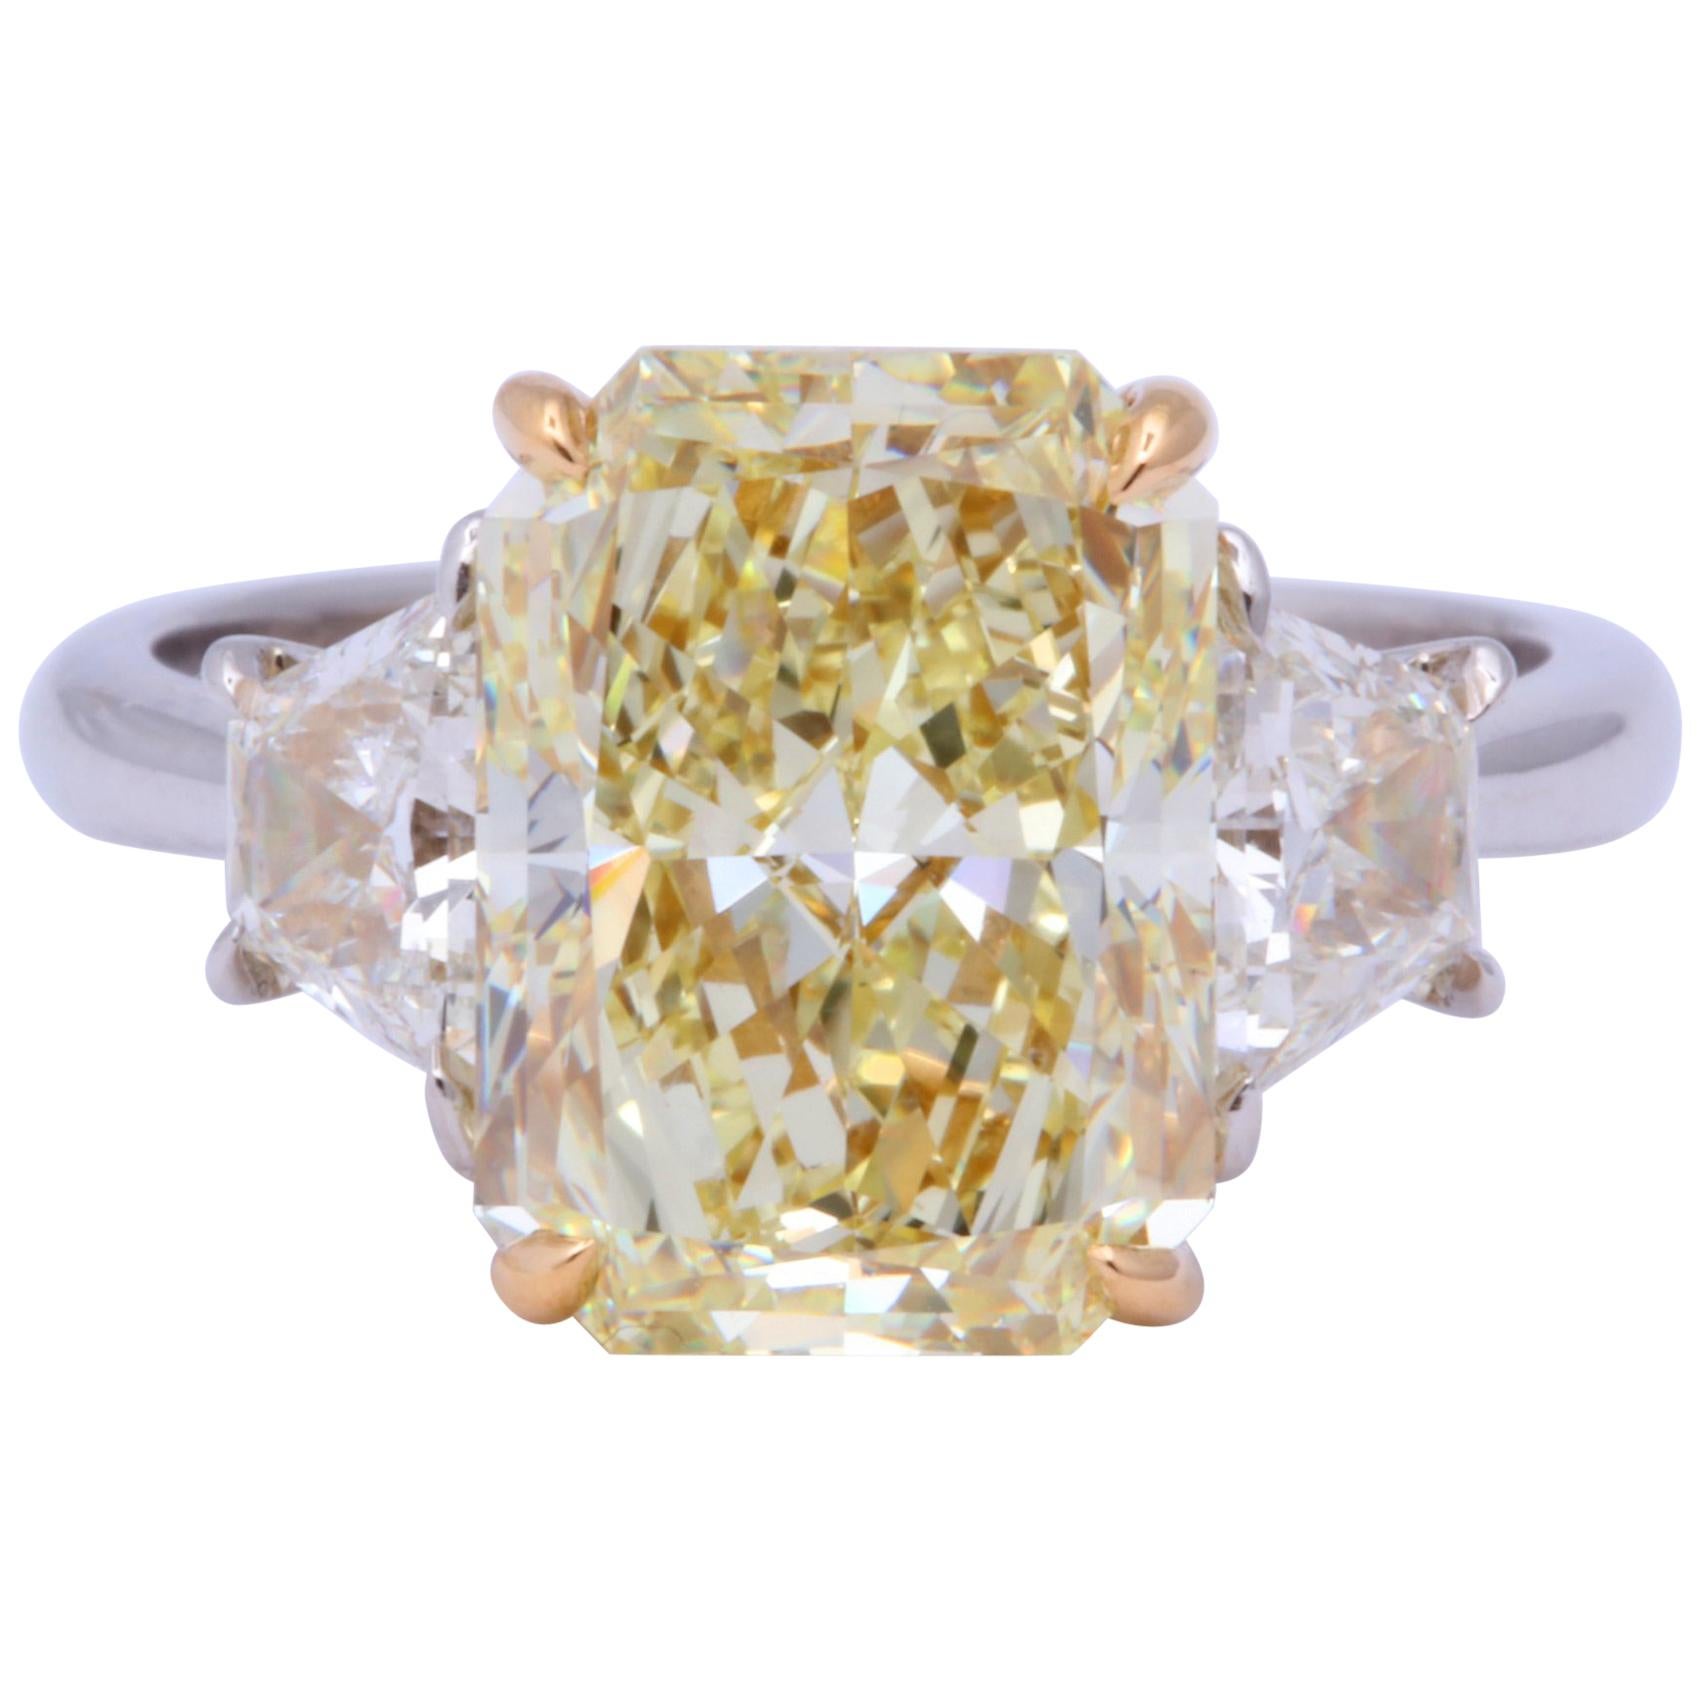 5 Carat Radiant Cut Yellow Diamond Ring GIA Certified